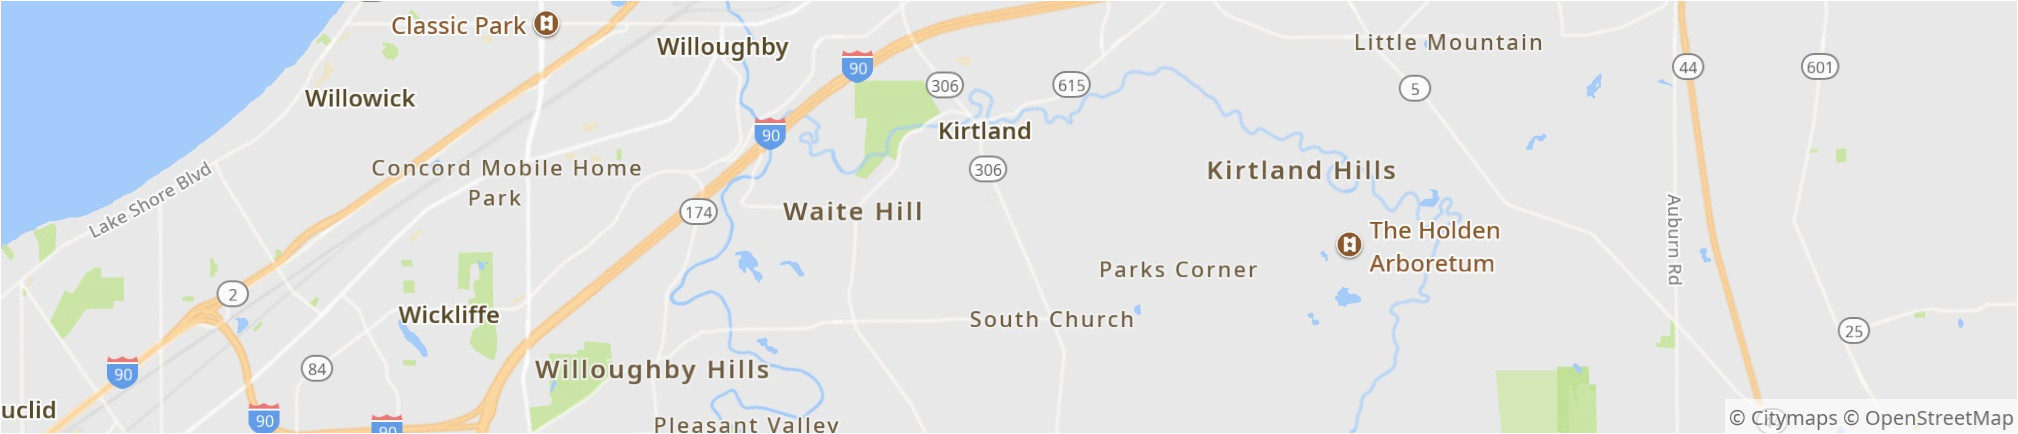 Kirtland Ohio Map Kirtland 2019 Best Of Kirtland Oh Tourism Tripadvisor Of Kirtland Ohio Map 